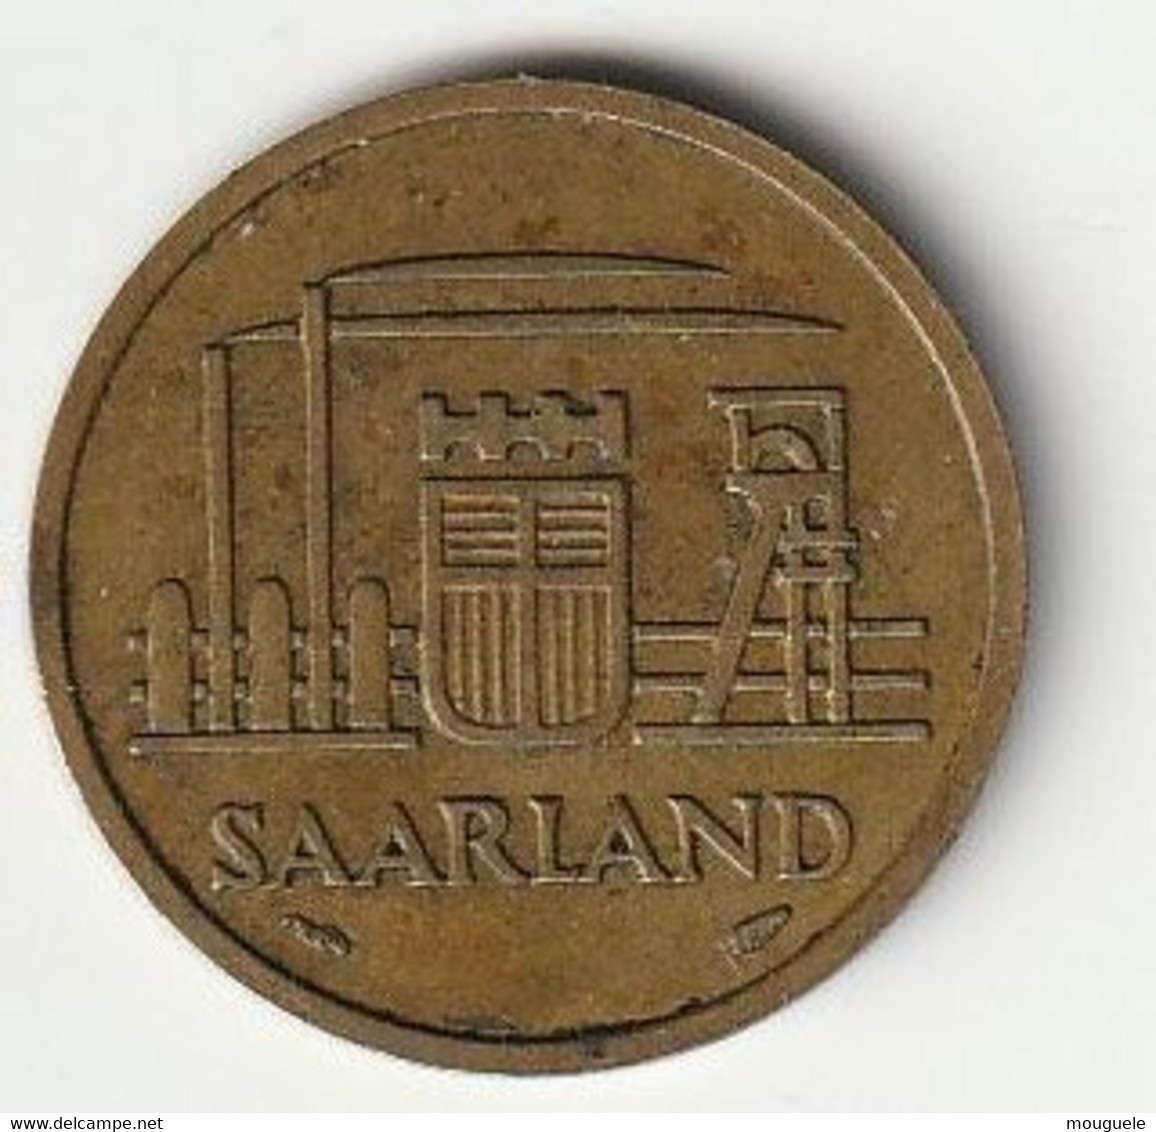 lot de  monnaies de Sarre 10 franken. 1954+ 20 franken.x2 1954 +100 franken 1955